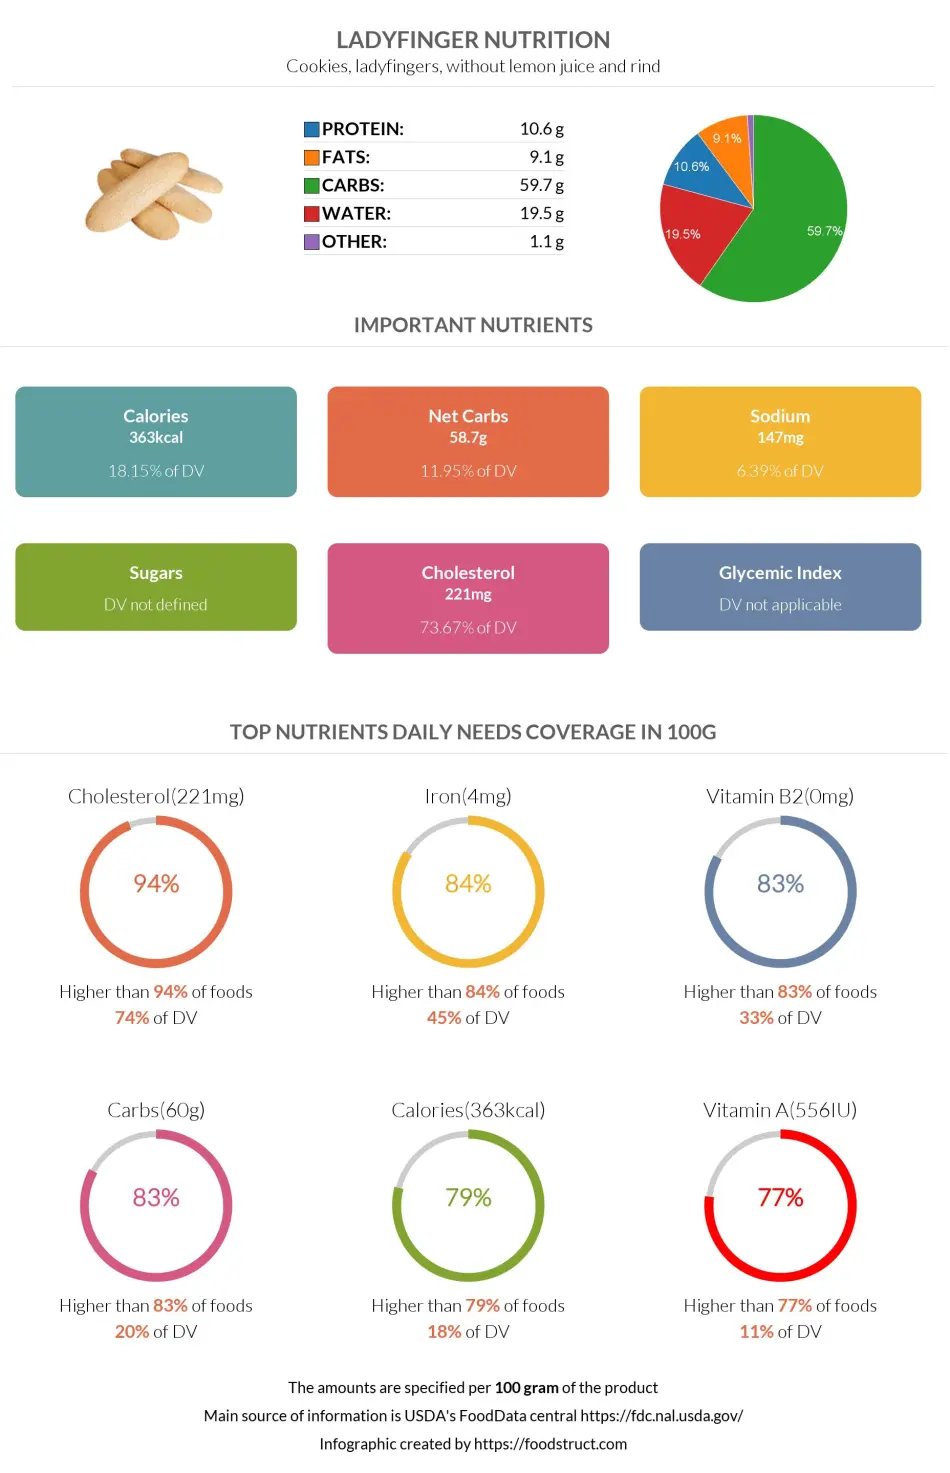 Ladyfinger nutrition infographic